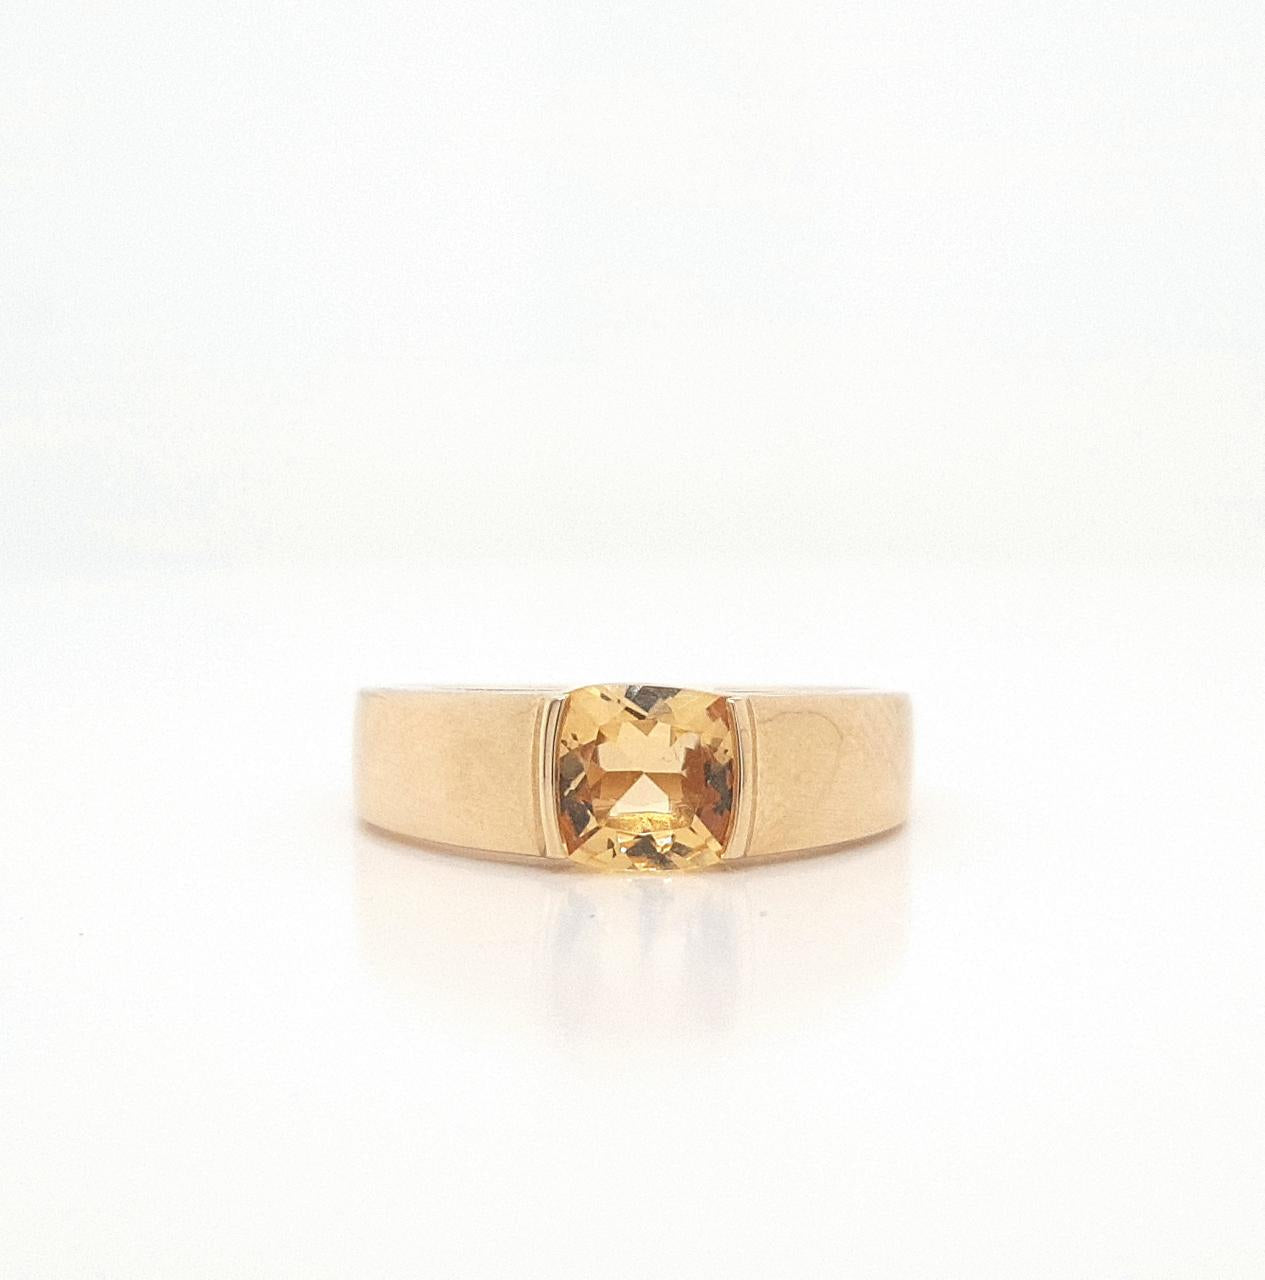 Citrine 9k Yellow Gold Semi Bezel Ring